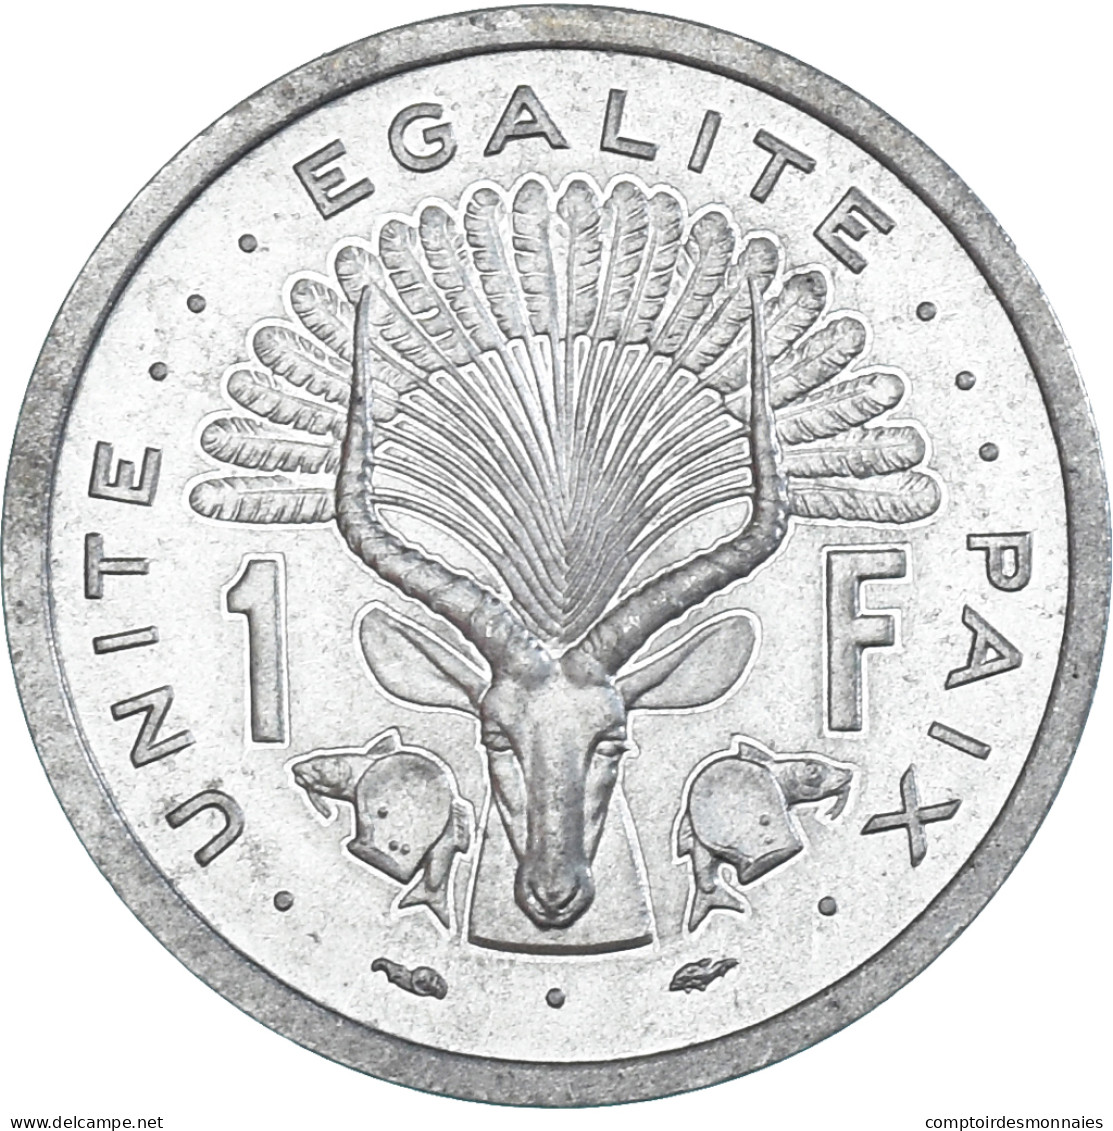 Monnaie, Djibouti, Franc, 1977, Monnaie De Paris, ESSAI, FDC, Aluminium, KM:E1 - Dschibuti